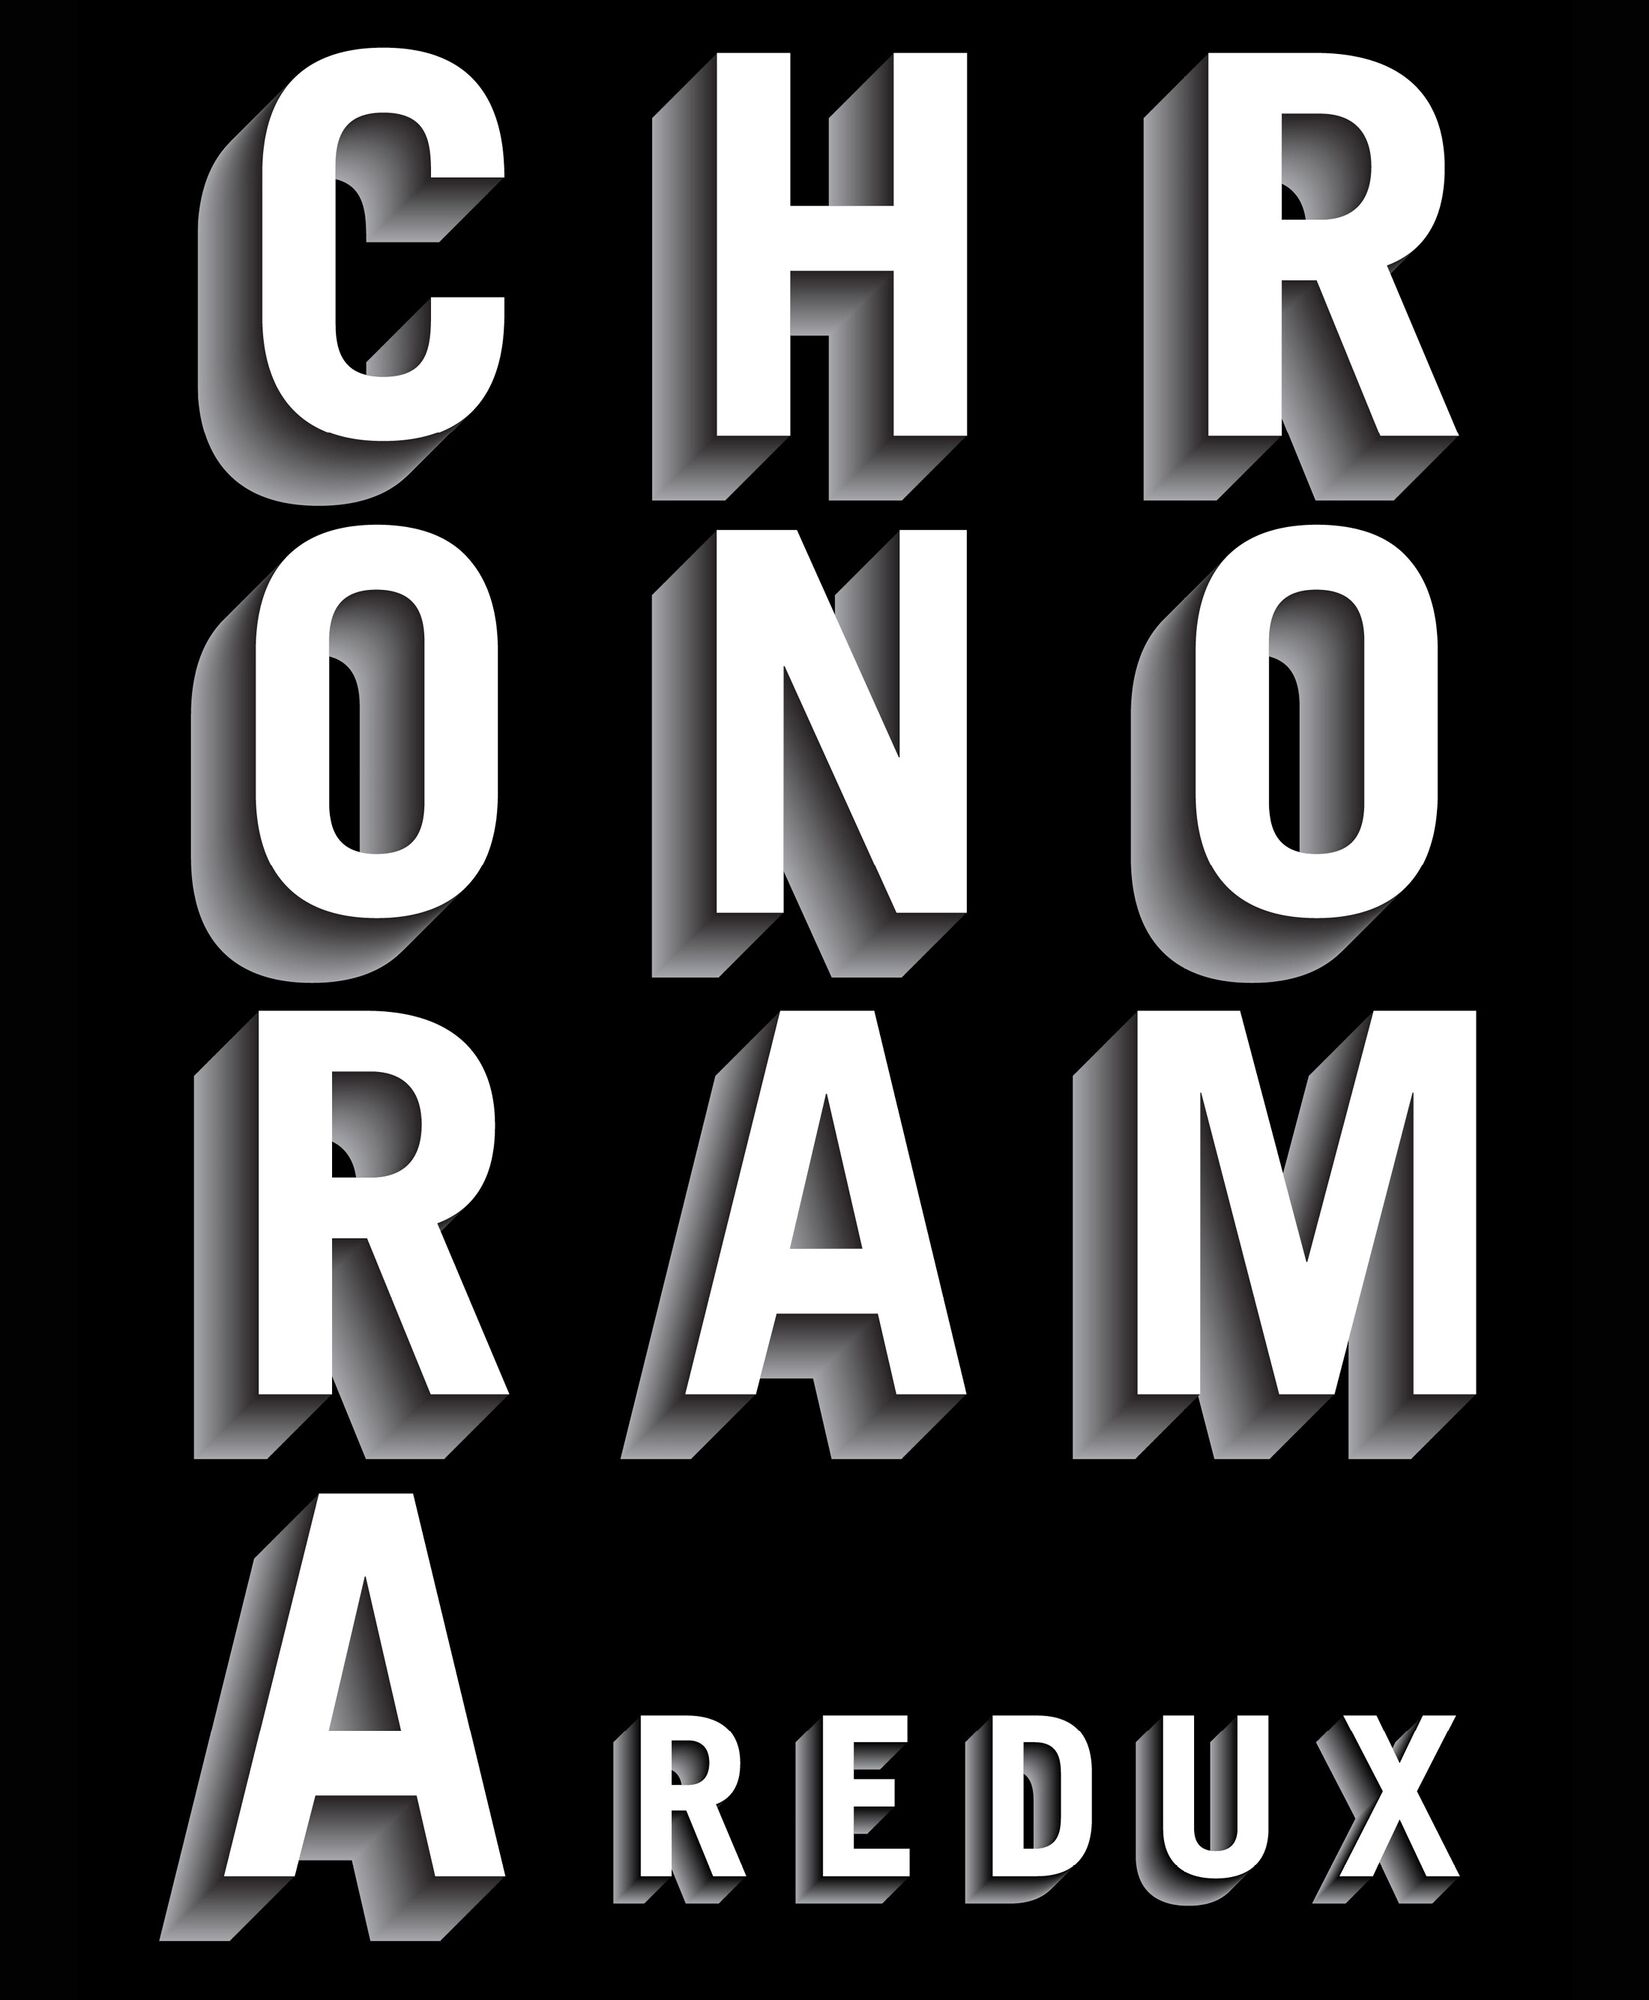 rd-event-chronorama-redux